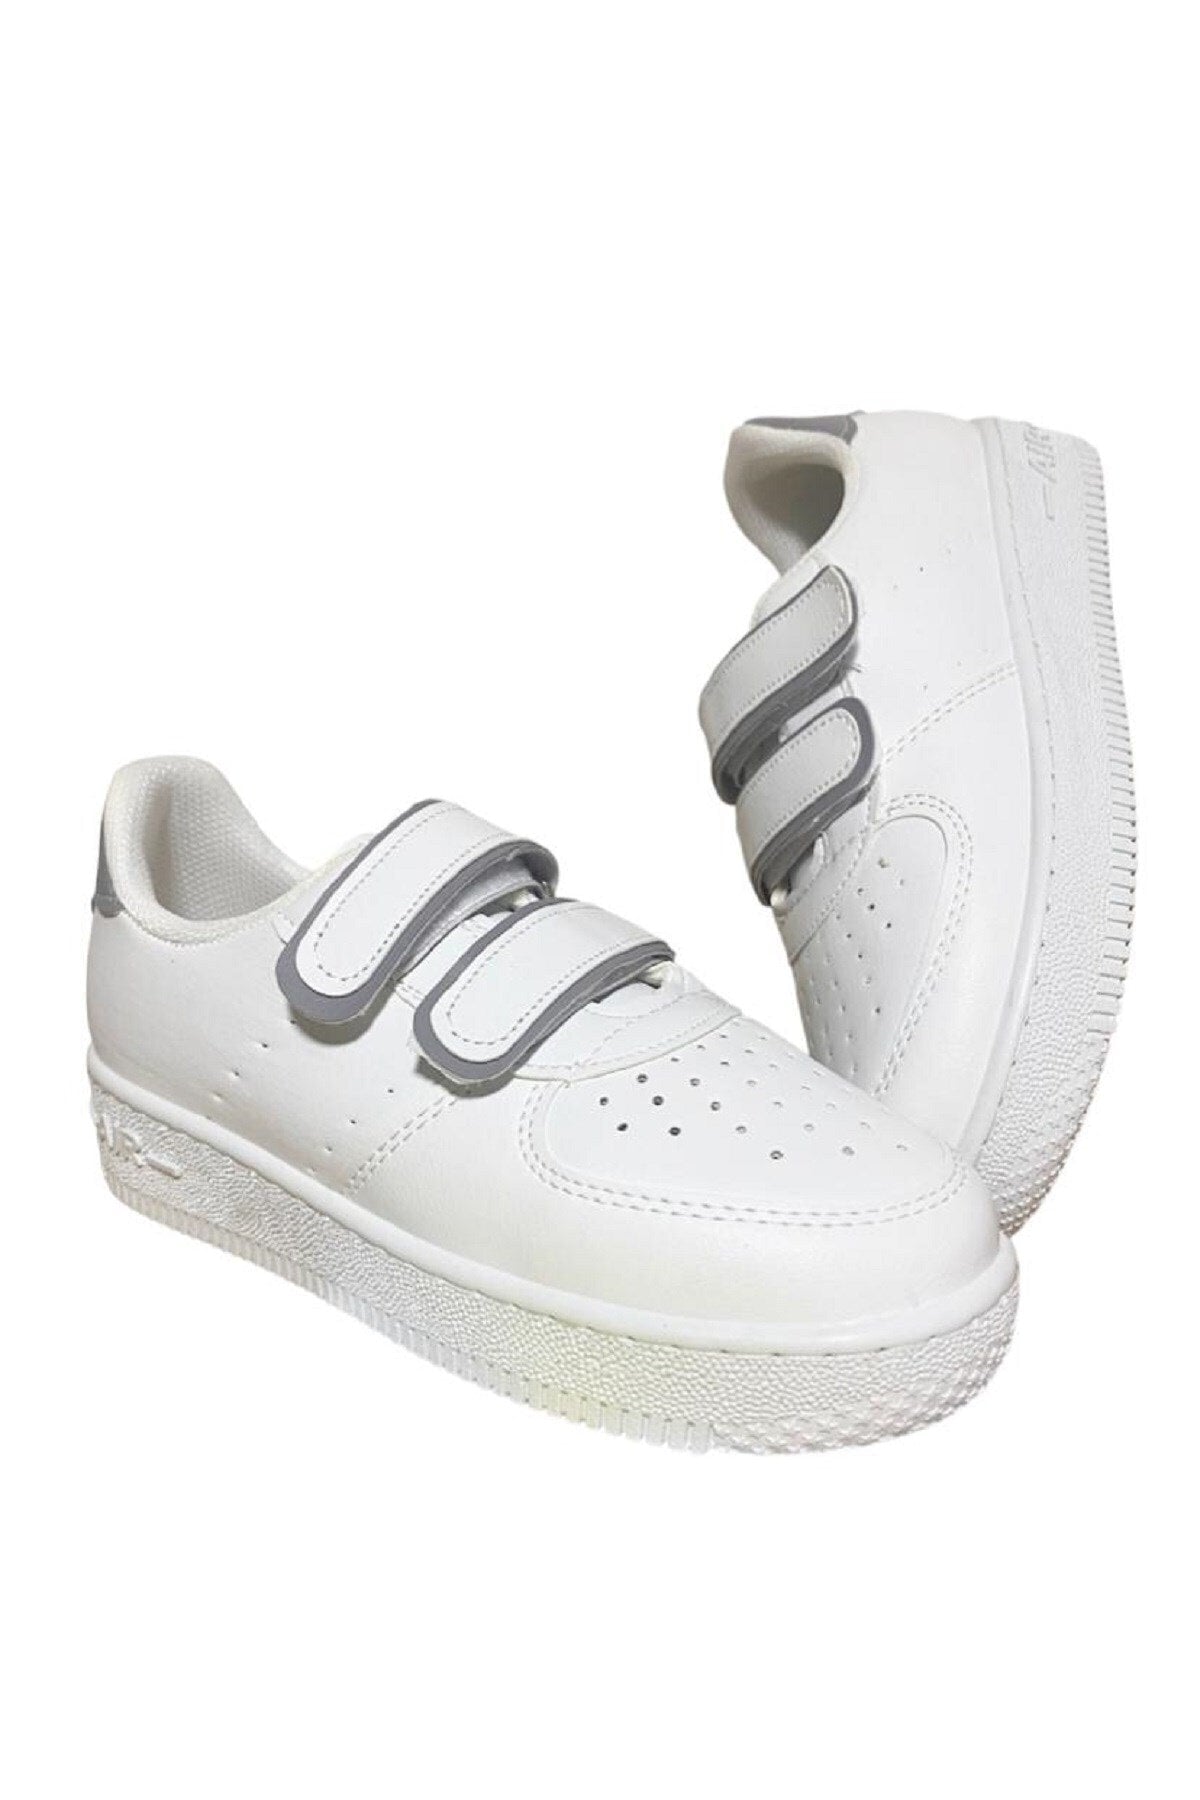 Unisex Girls Boys Velcro Sneakers Sneaker - White Smoked